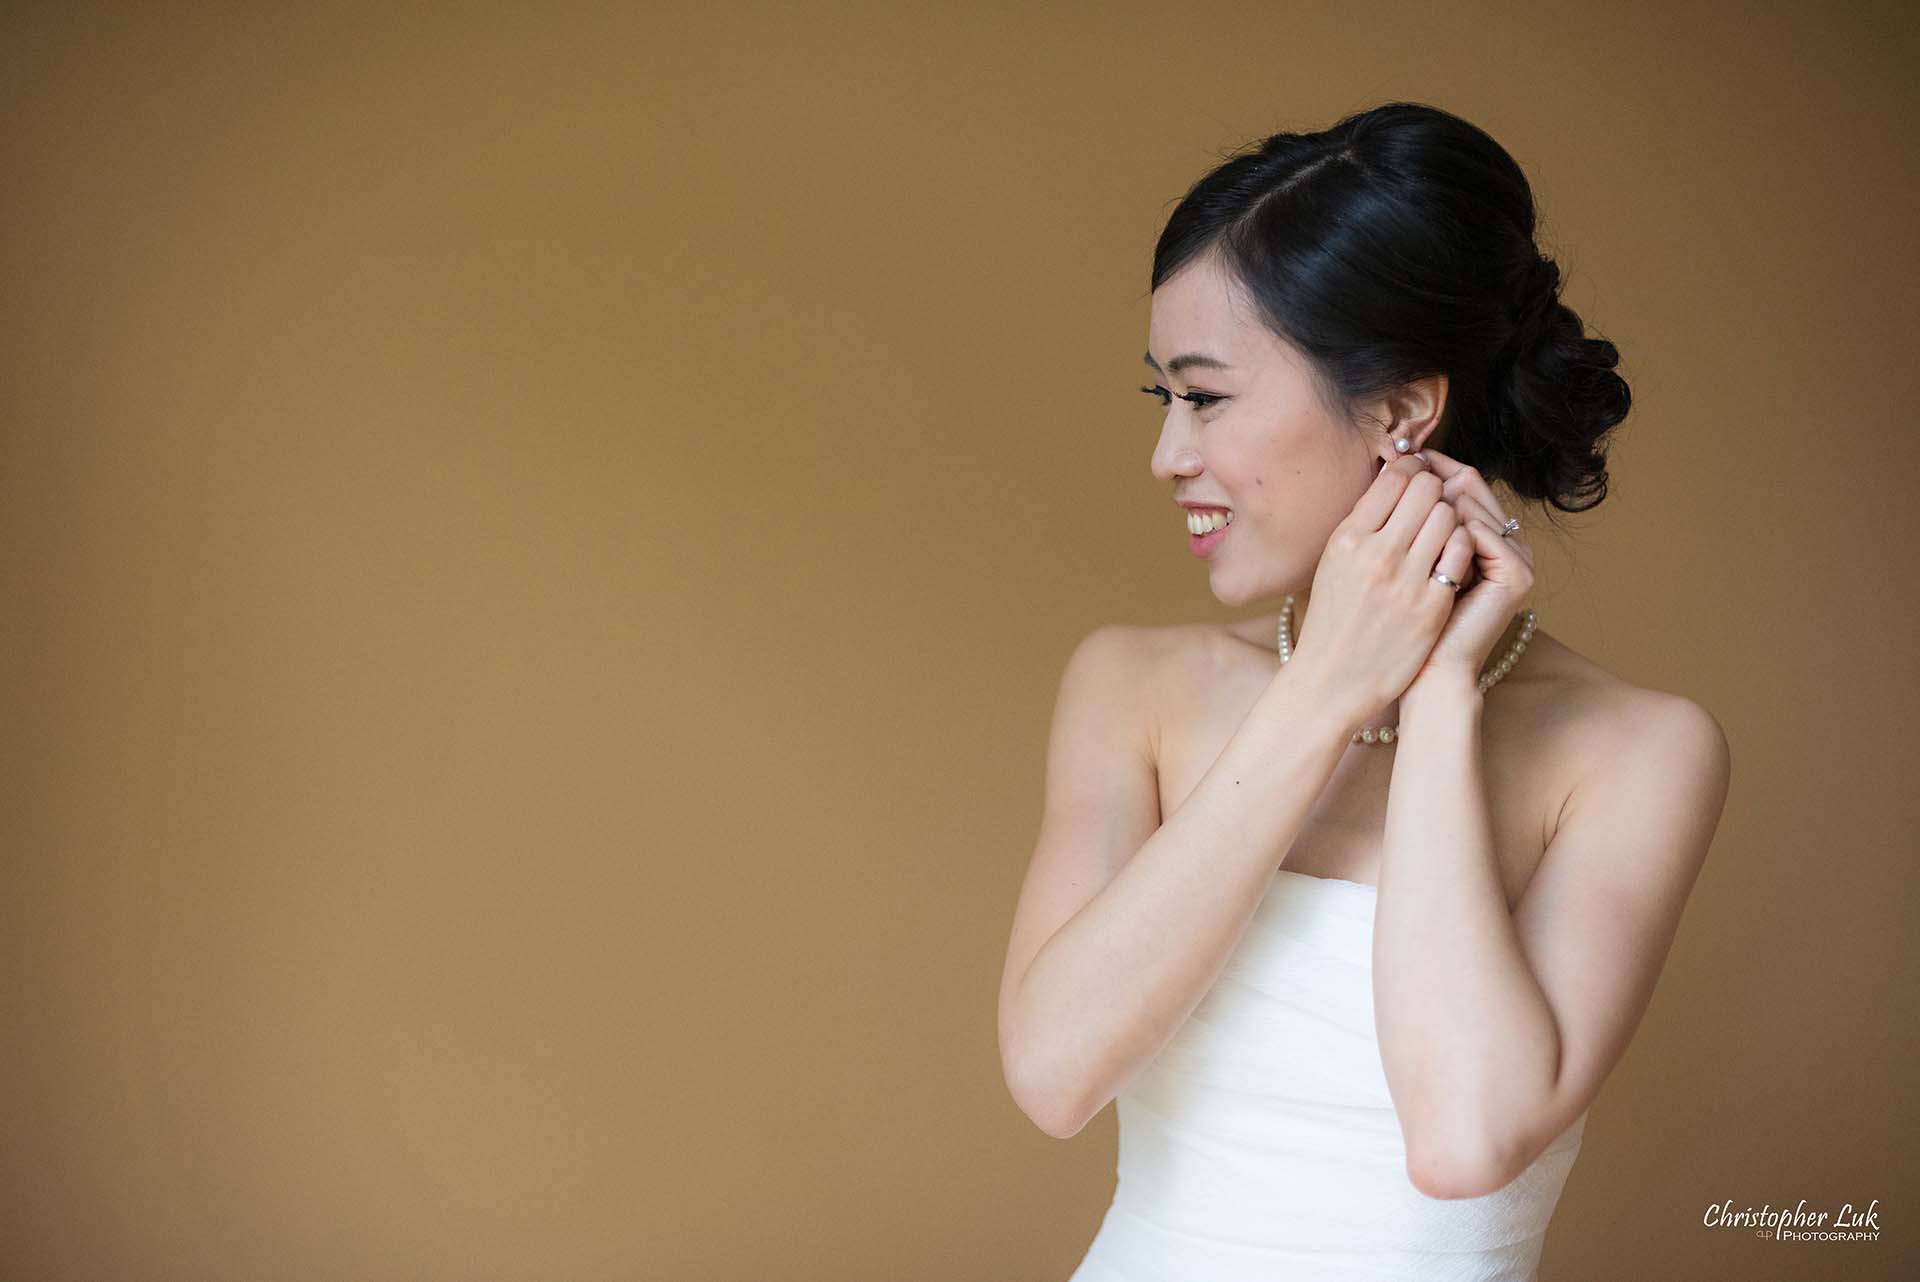 Christopher Luk Toronto Wedding Photographer Bride Getting Ready Preparations Bridal Earrings